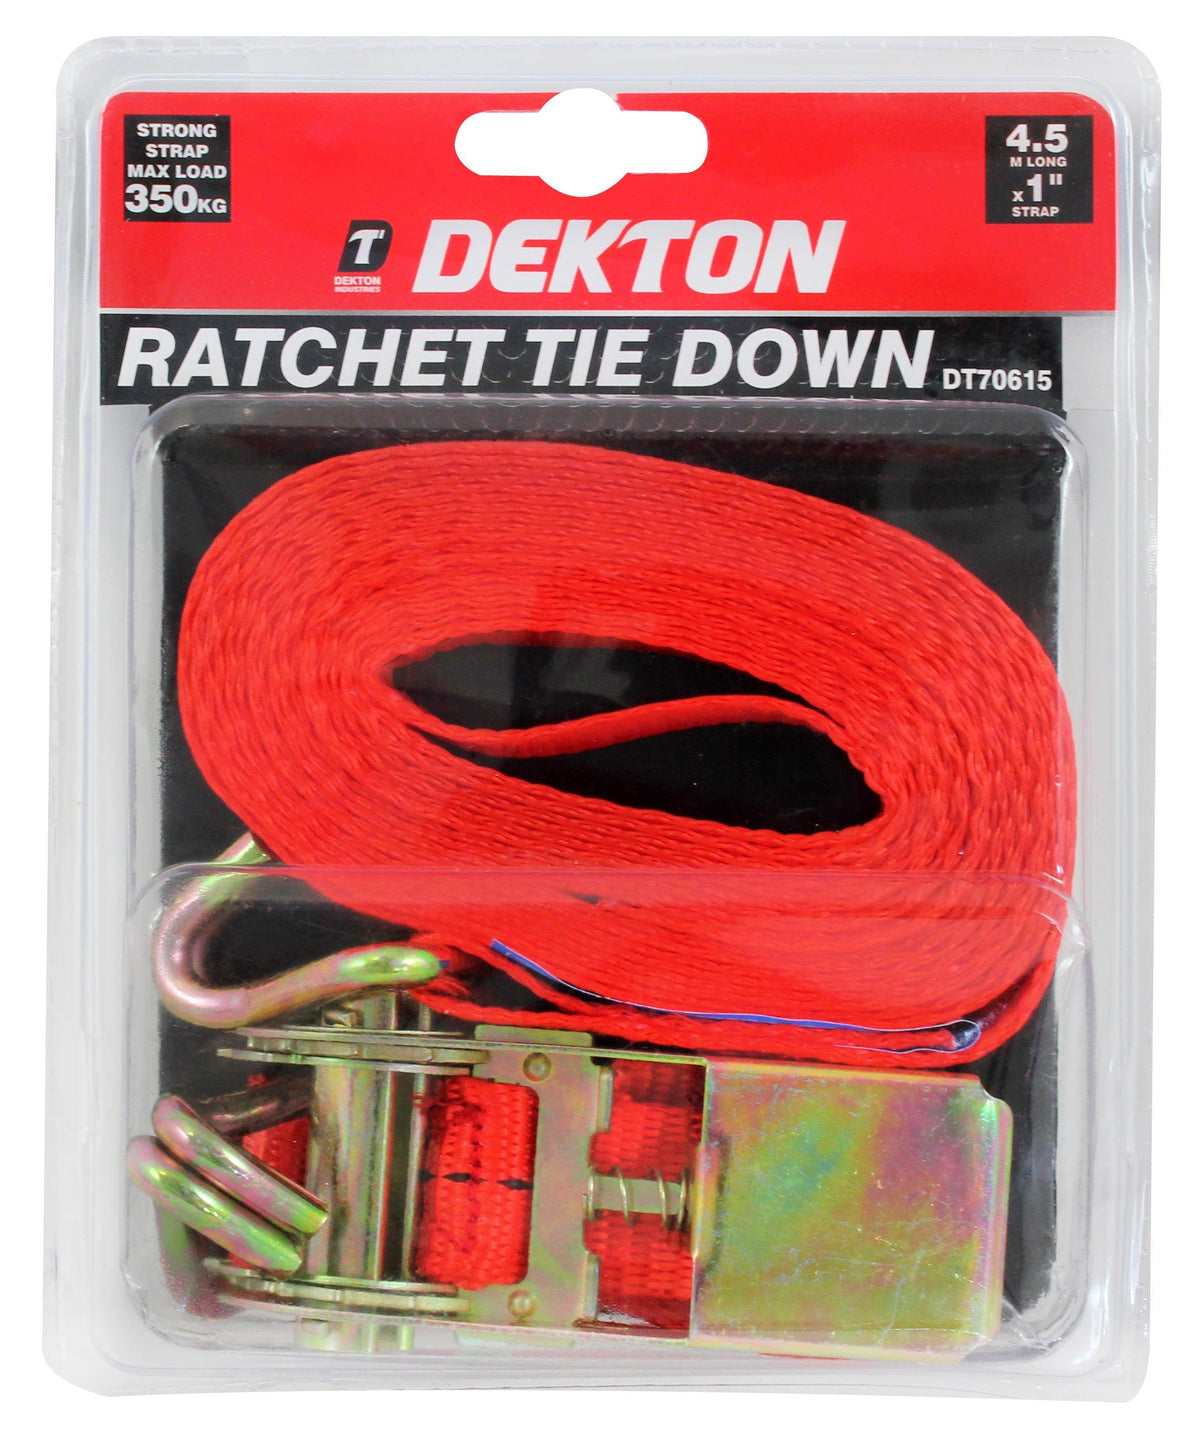 Dekton Ratchet Tie Down - Choice Stores